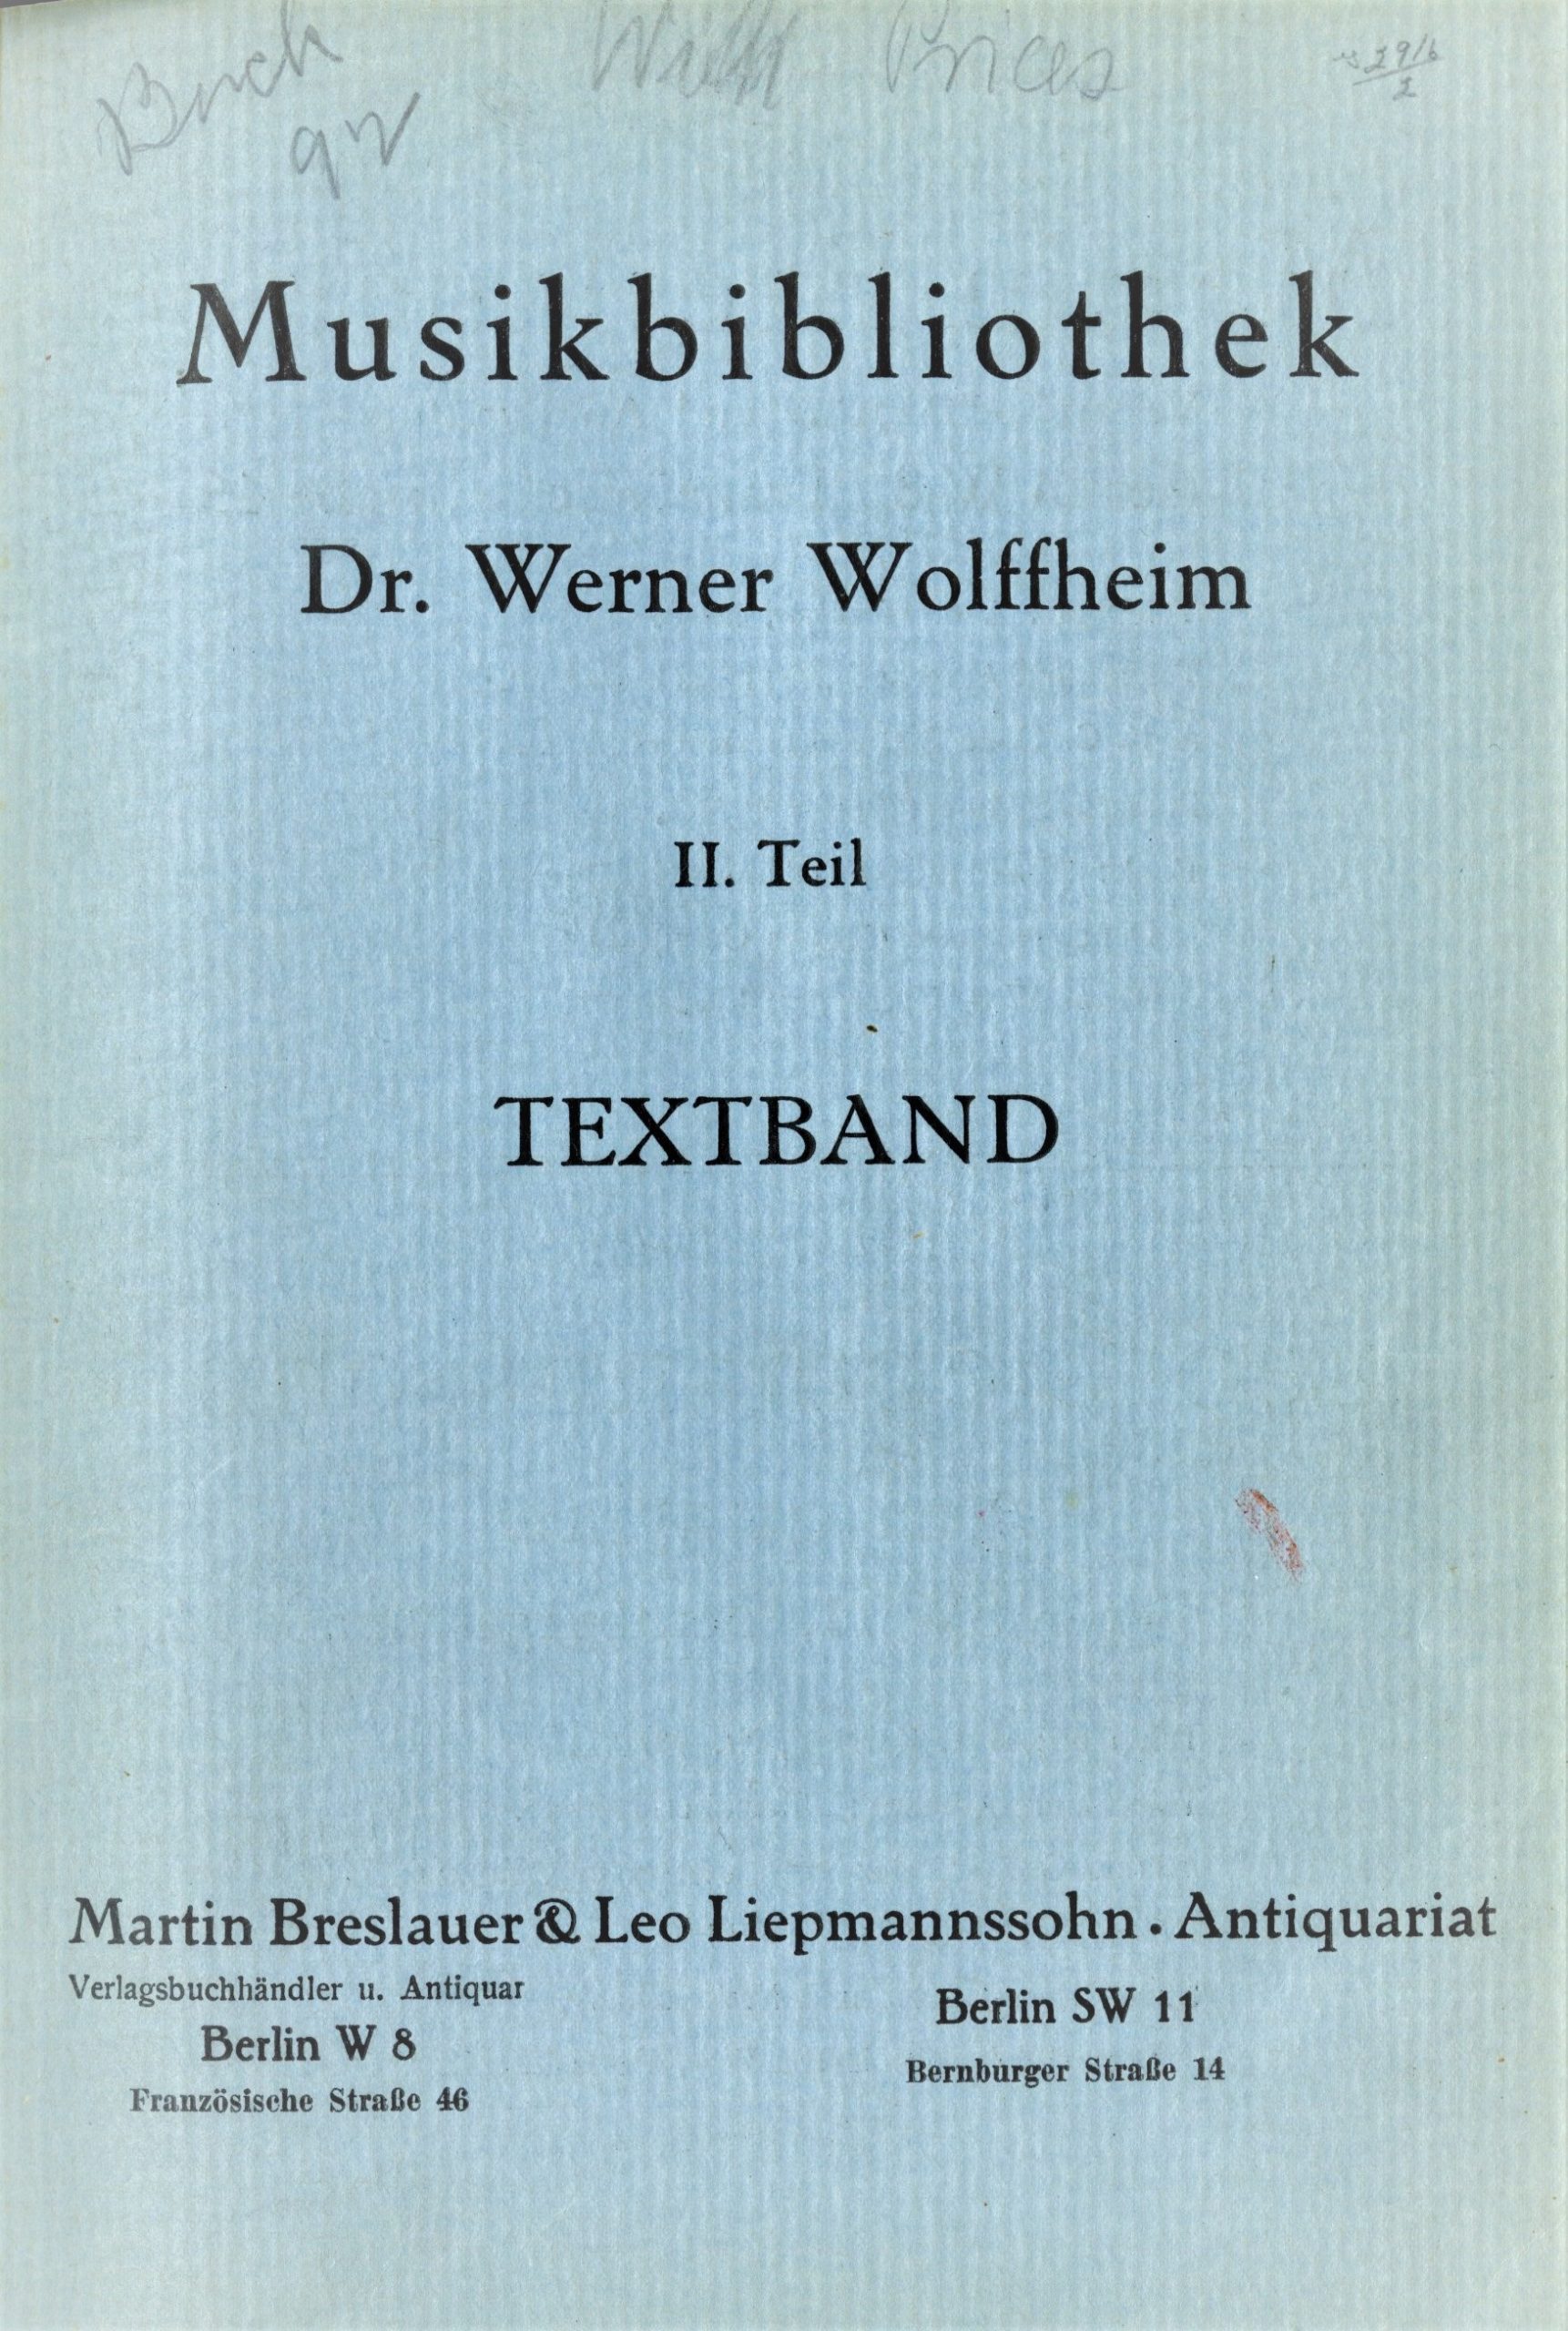 Wolffheim auction catalog vol 2, cover